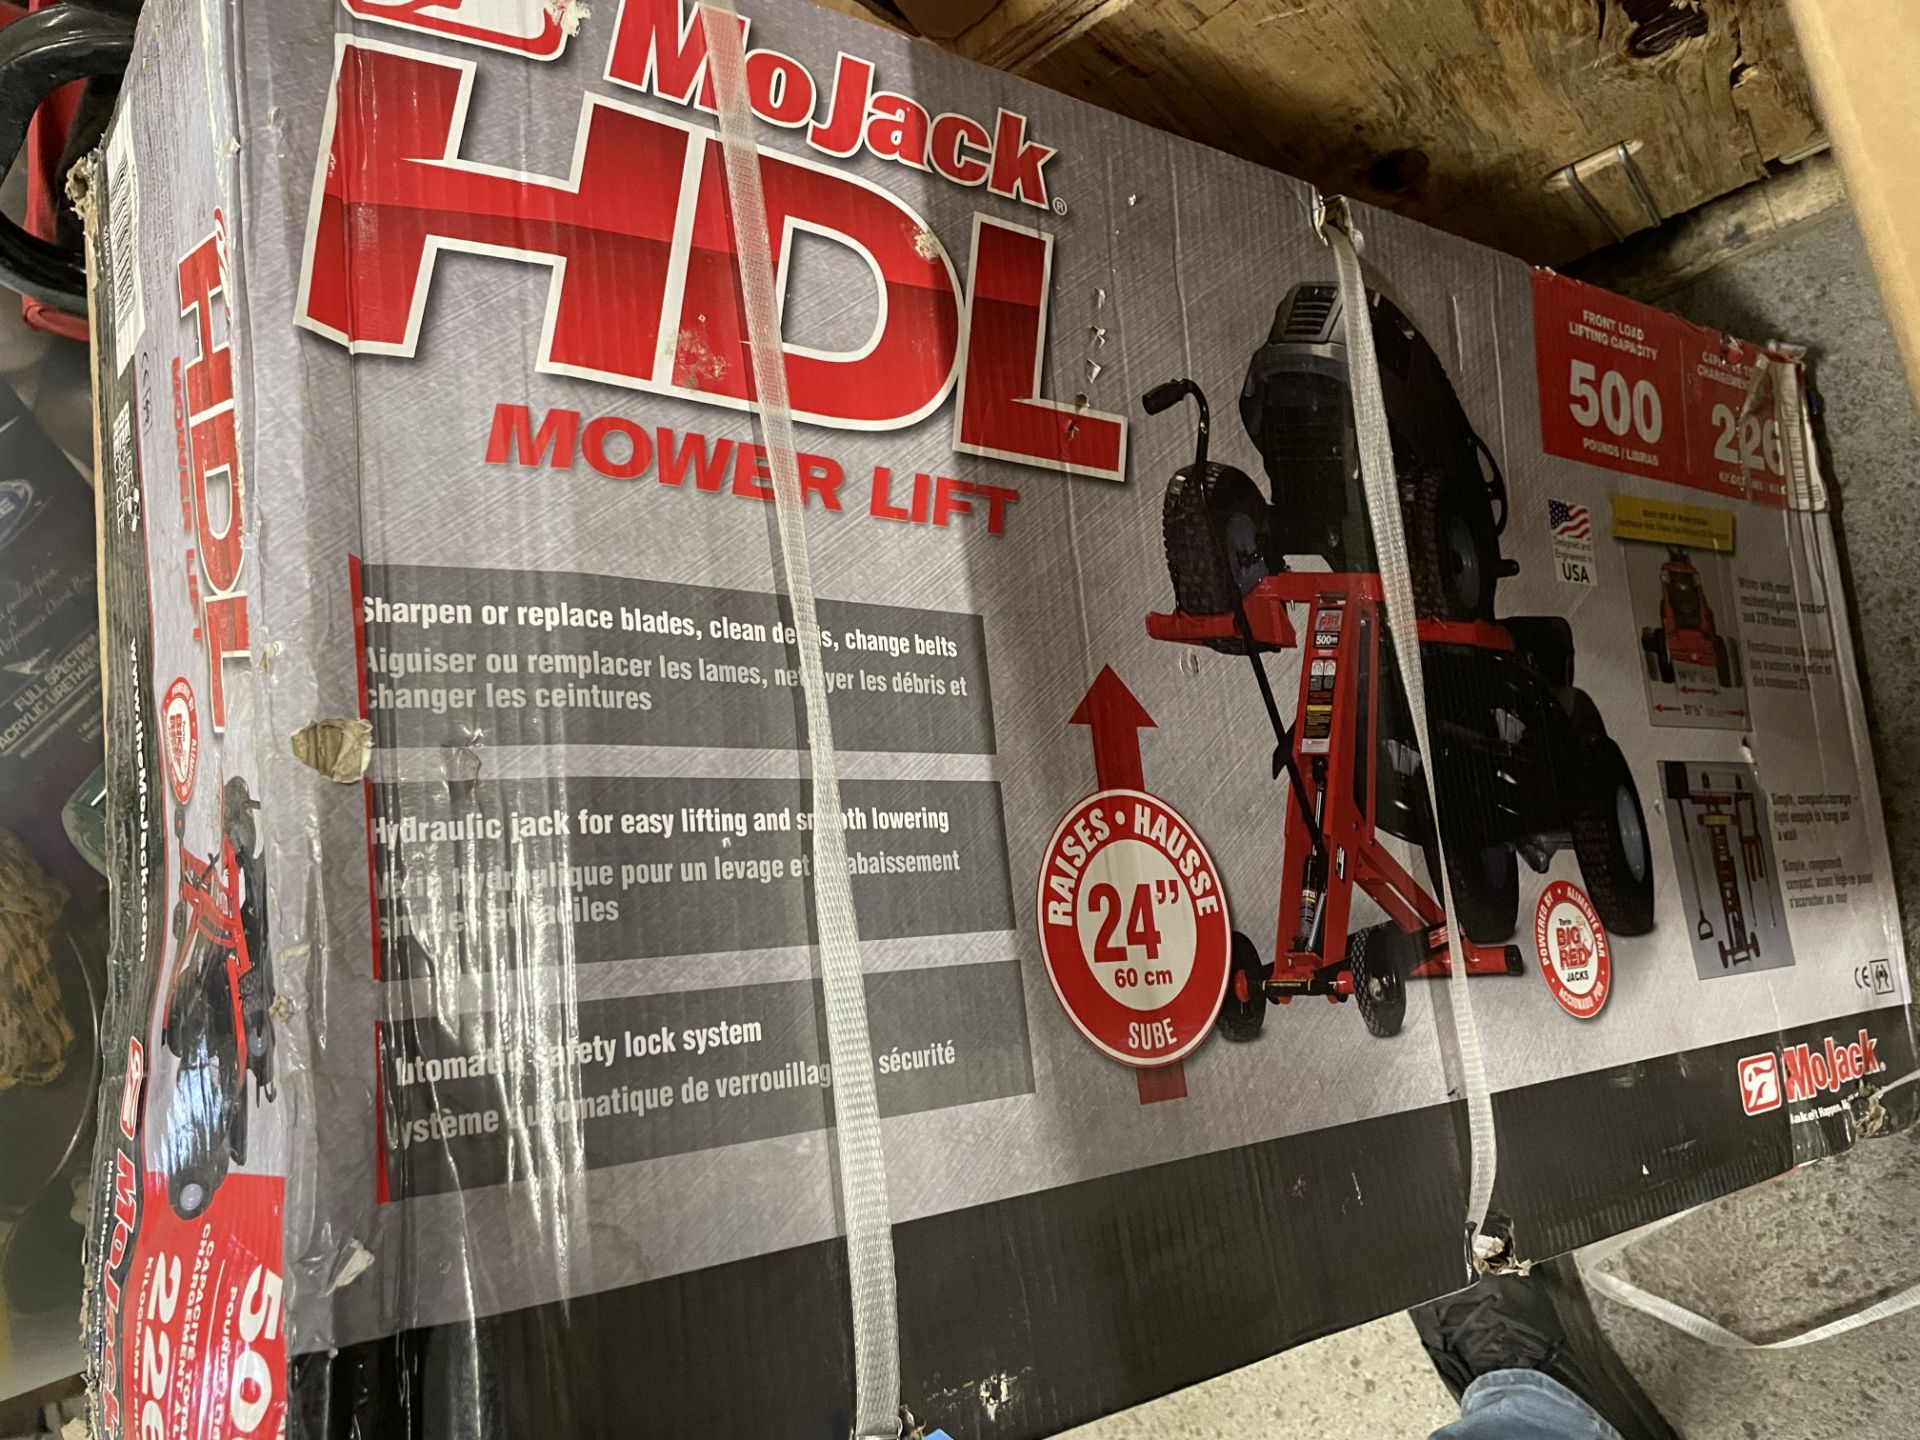 New Mojack HDL. Mower Lift